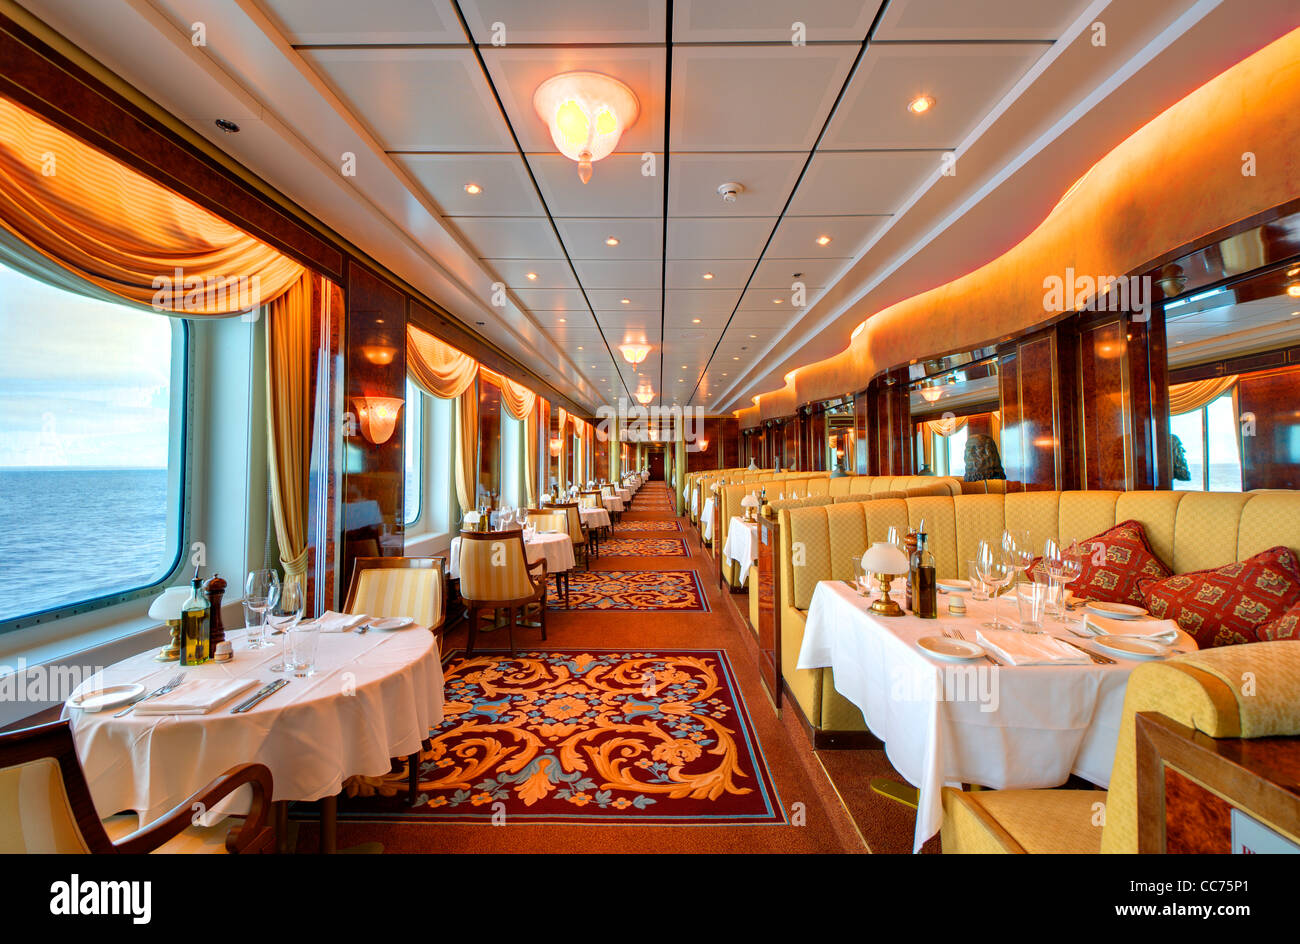 Elegant dining hall Stock Photo